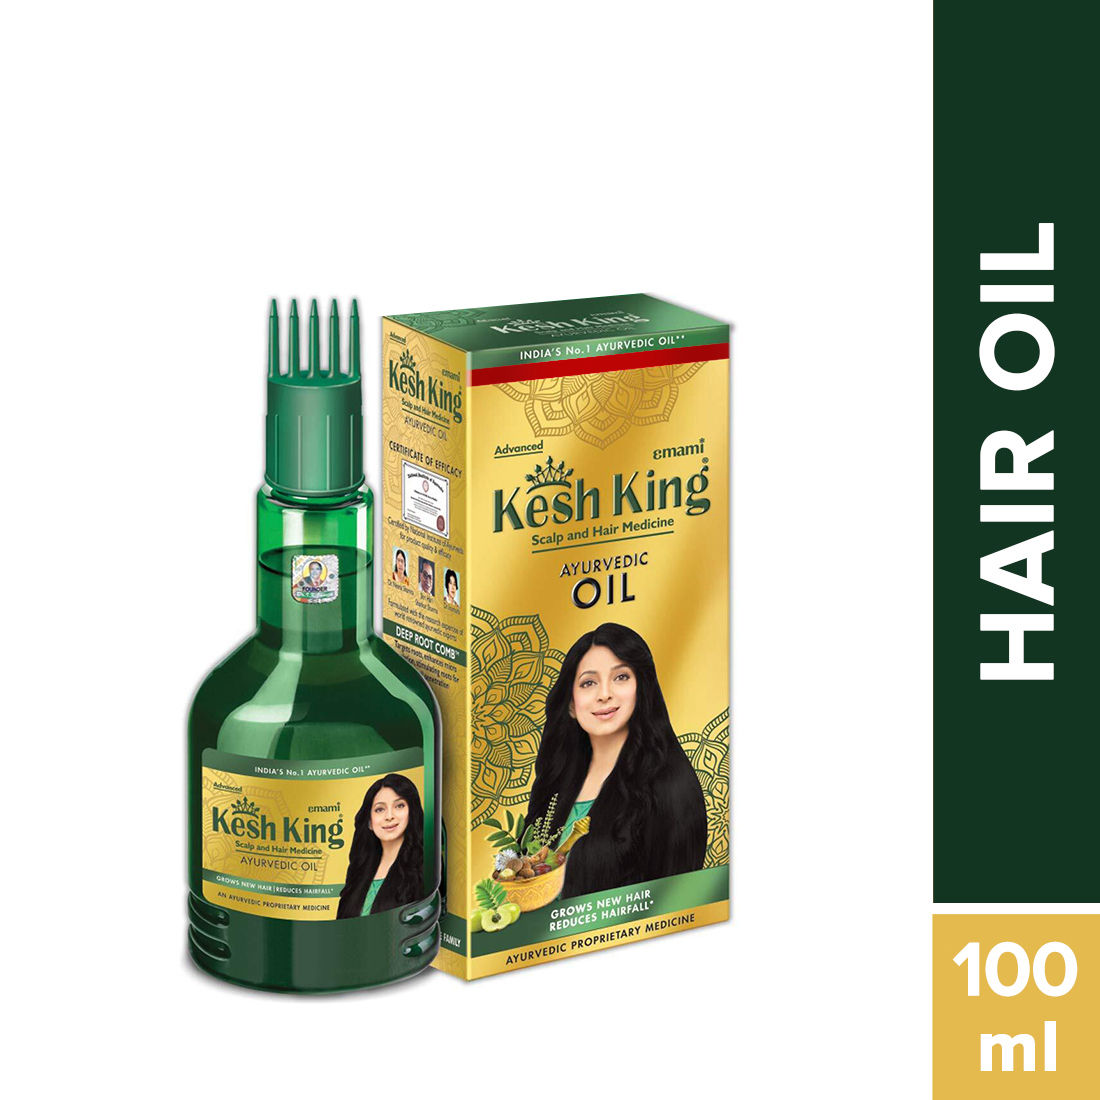 Buy Kesh King Ayurvedic Scalp and Hair Medicine Ayurvedic Oil, 100 ml Online